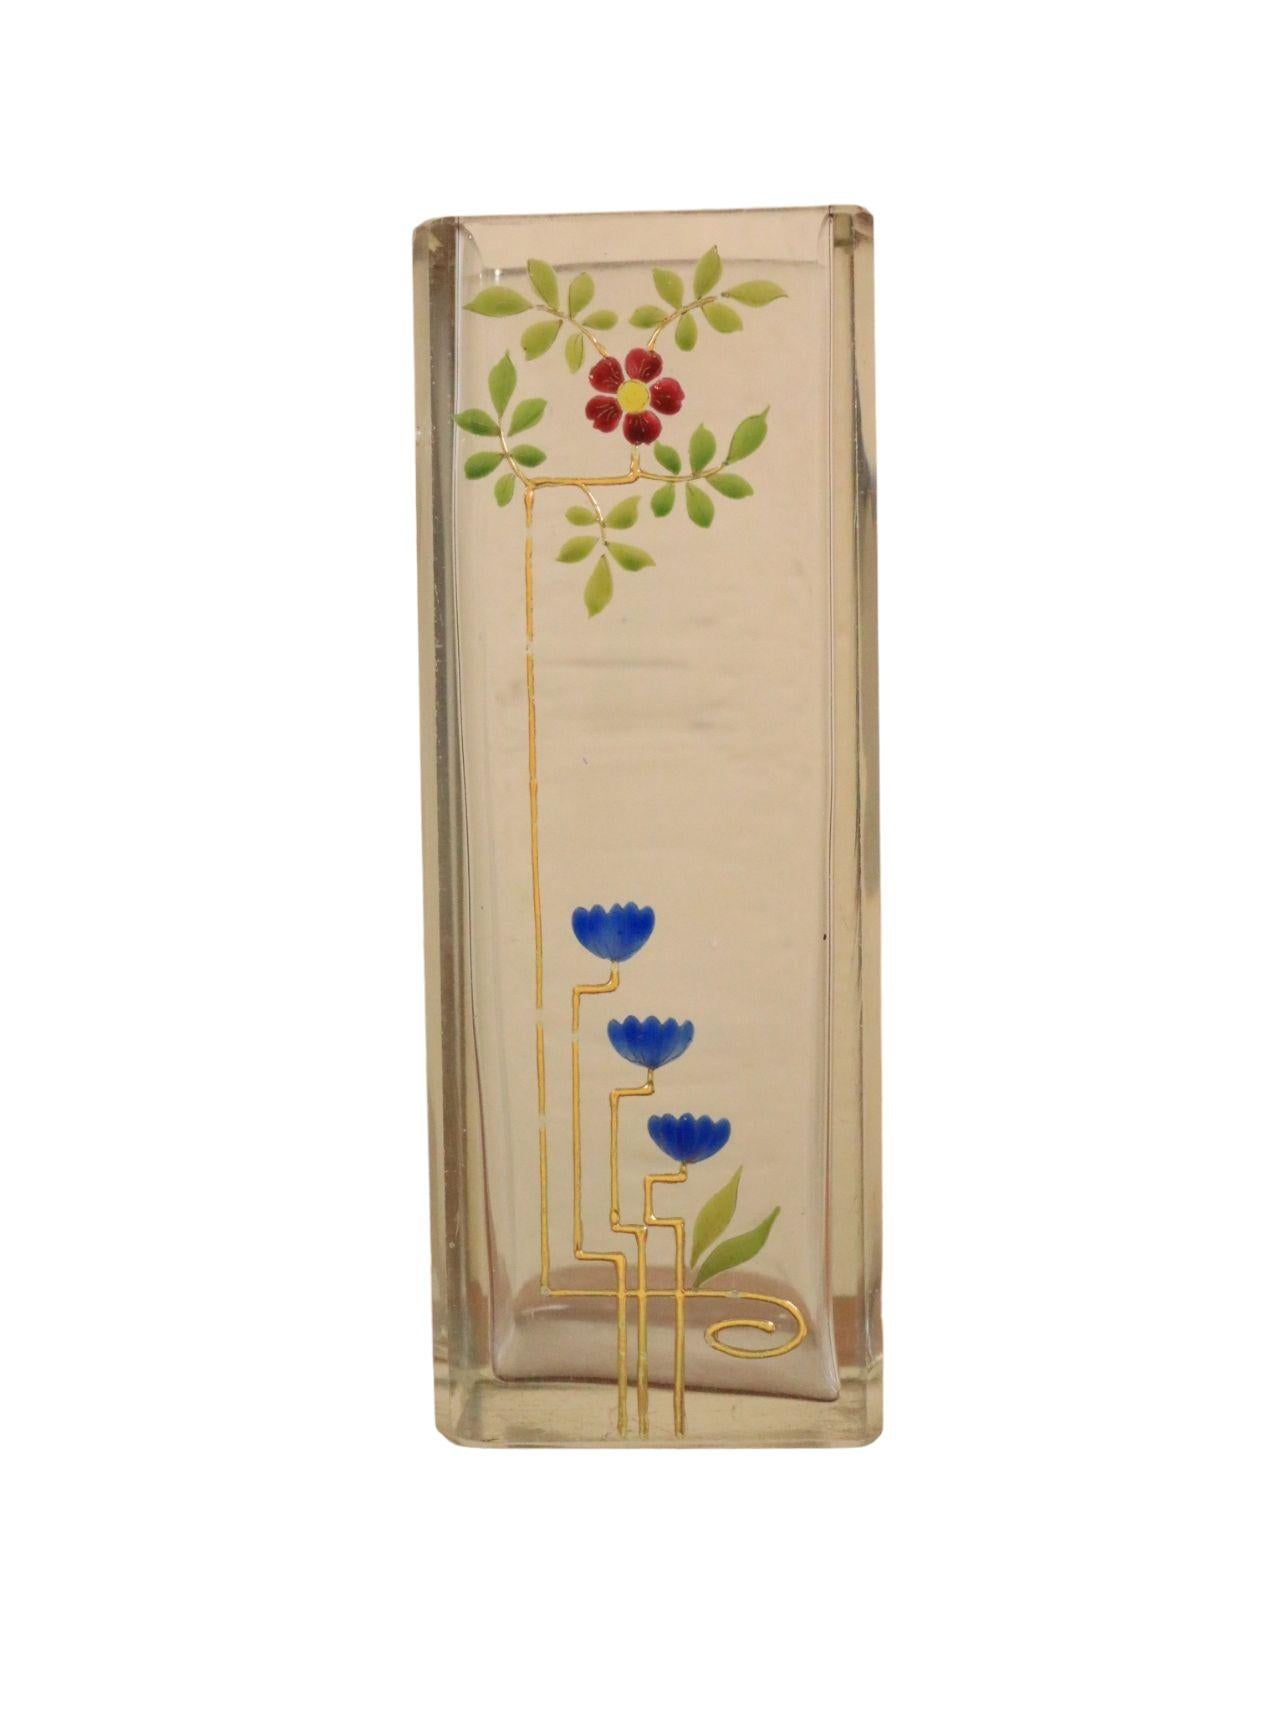 Rare Small Art Nouveau Glass Vase, 1900, Josef Riedel, Polaun For Sale 1